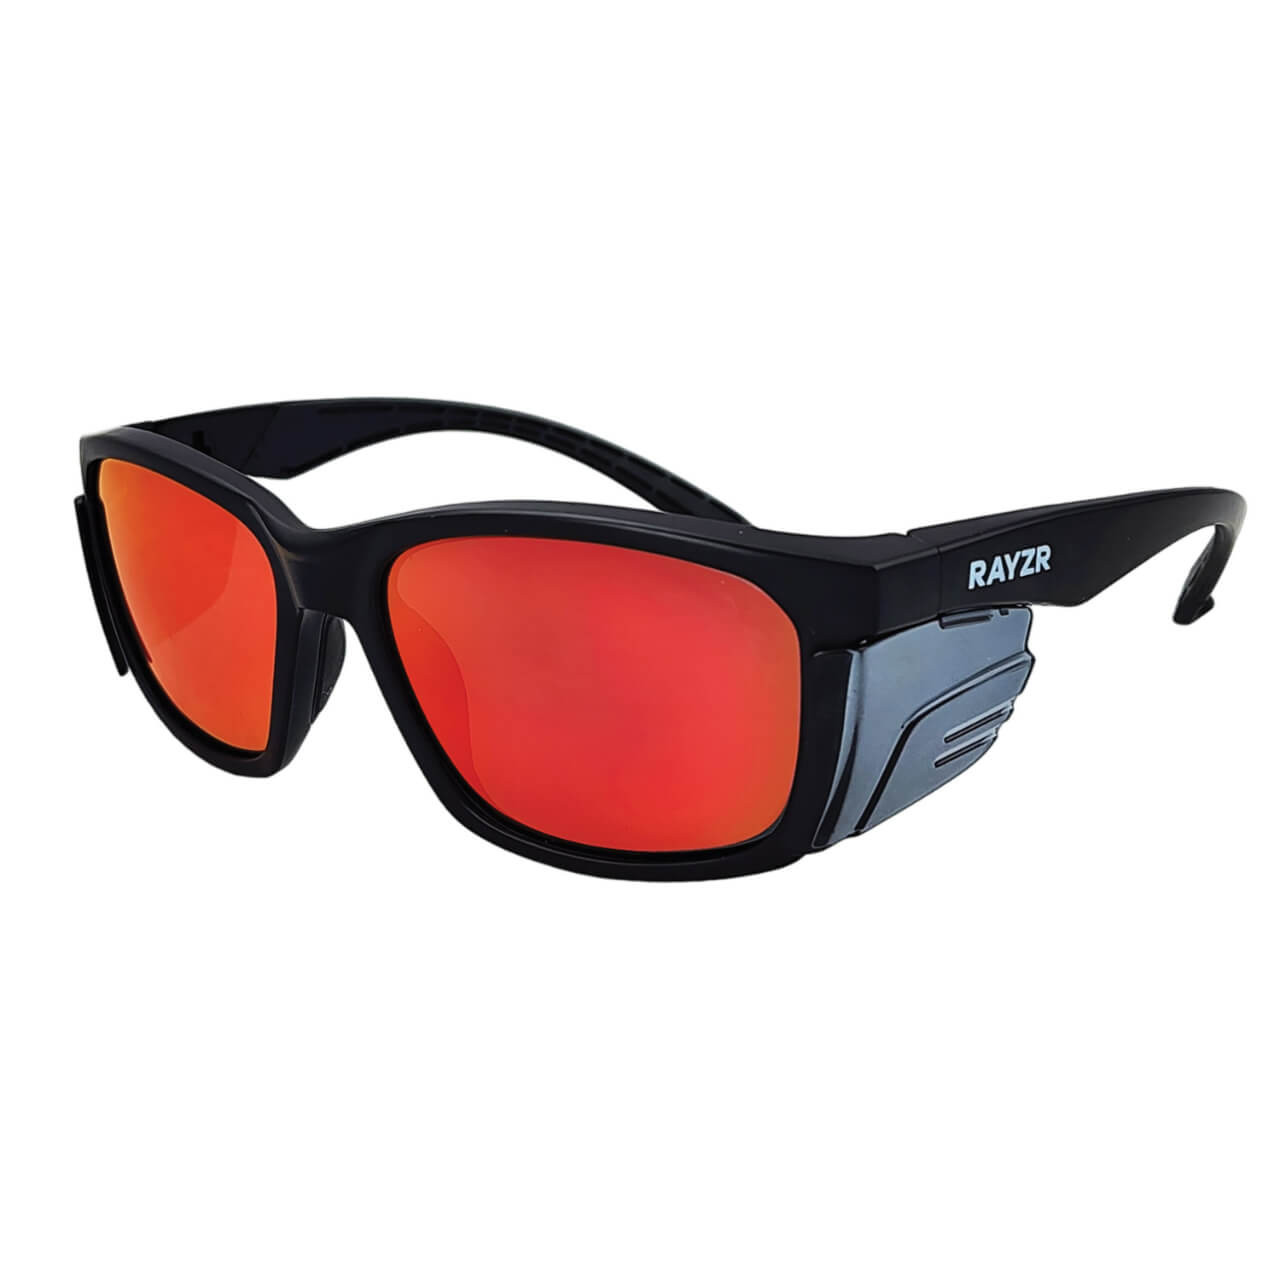 Rayzr Matte Black Frame Red Mirror Lens Polarised Safety Glasses